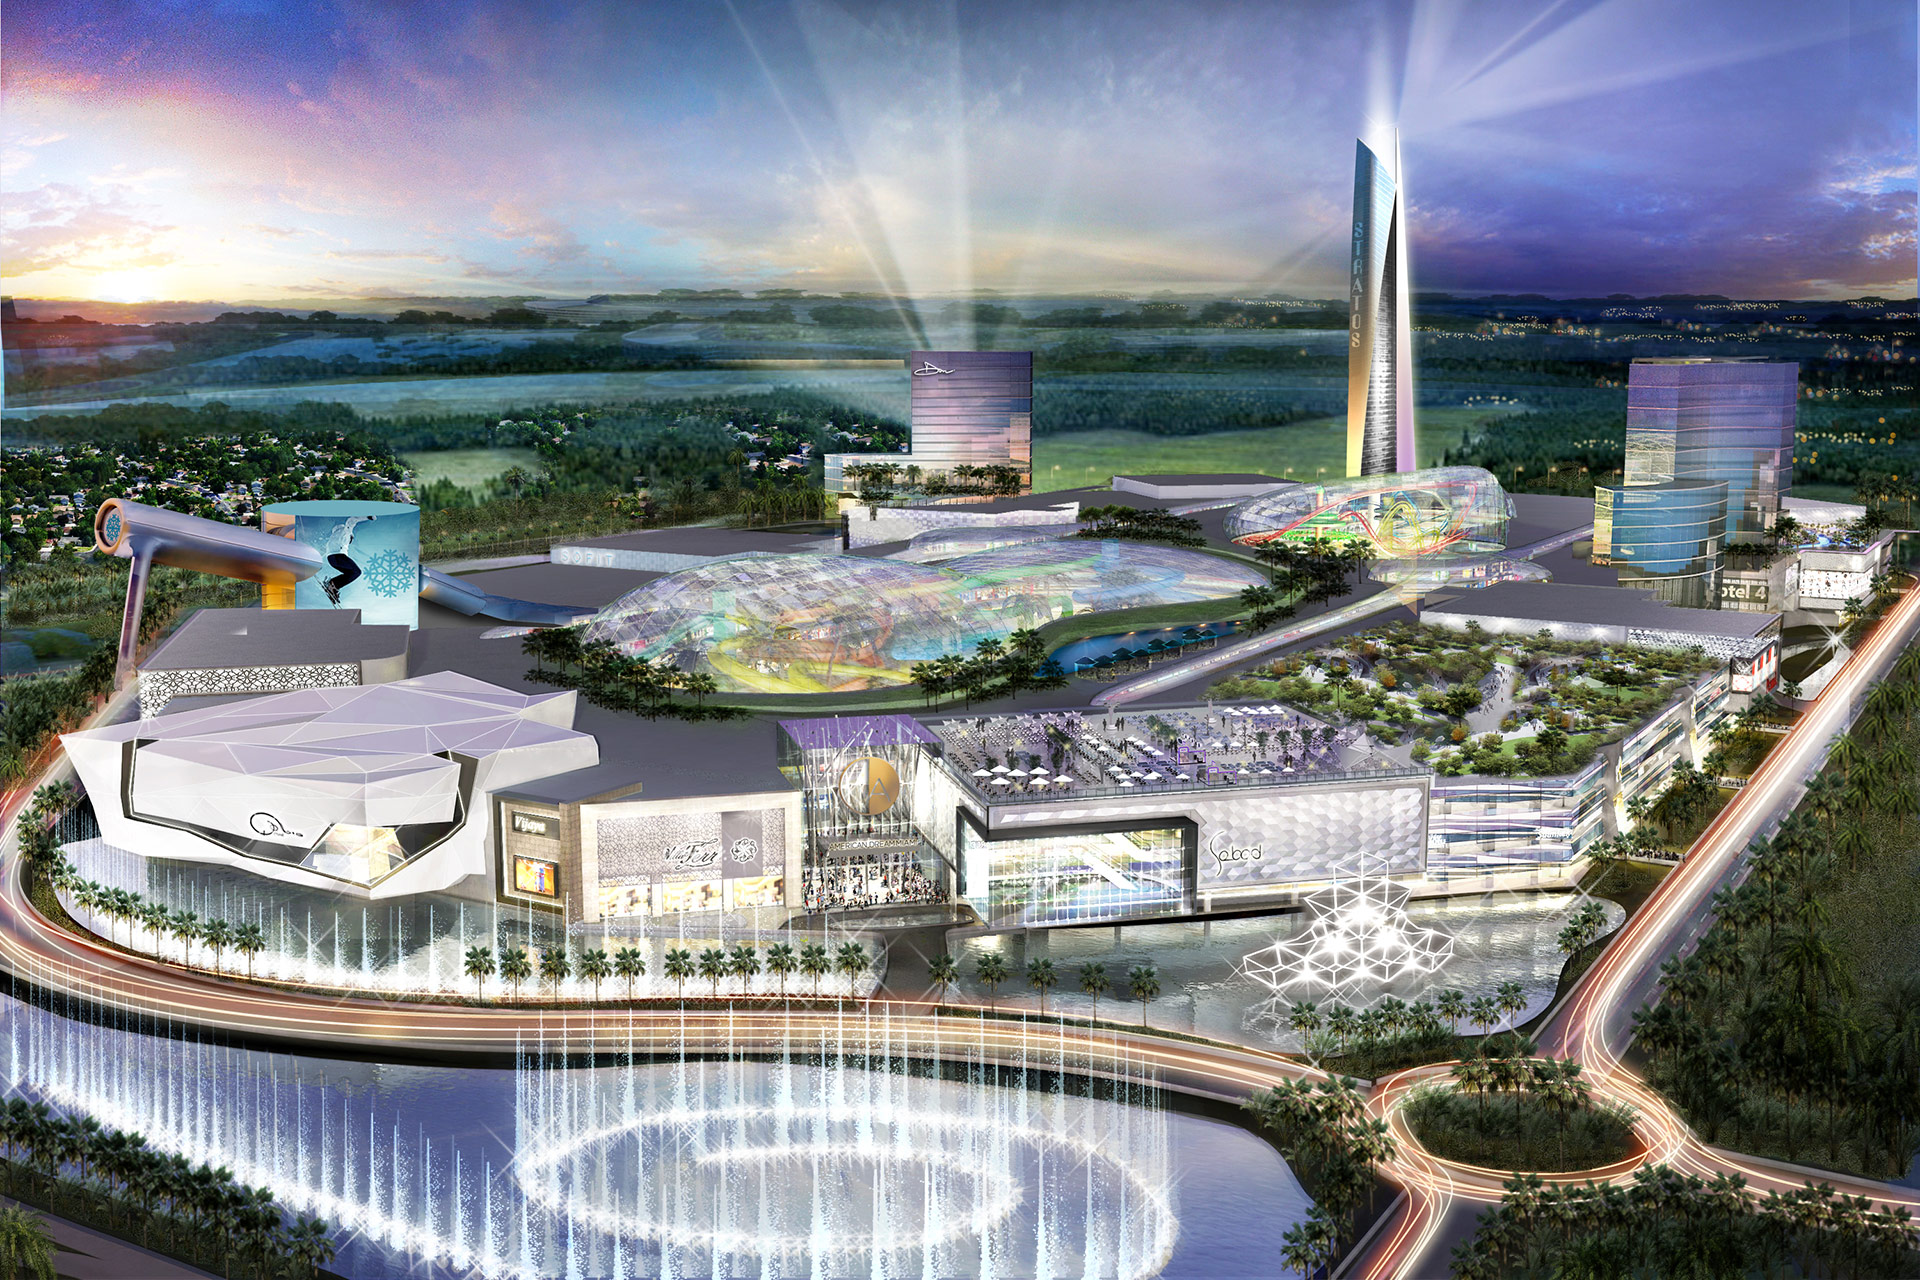 COVID-19 sidelines New Jersey's bond-financed American Dream mall